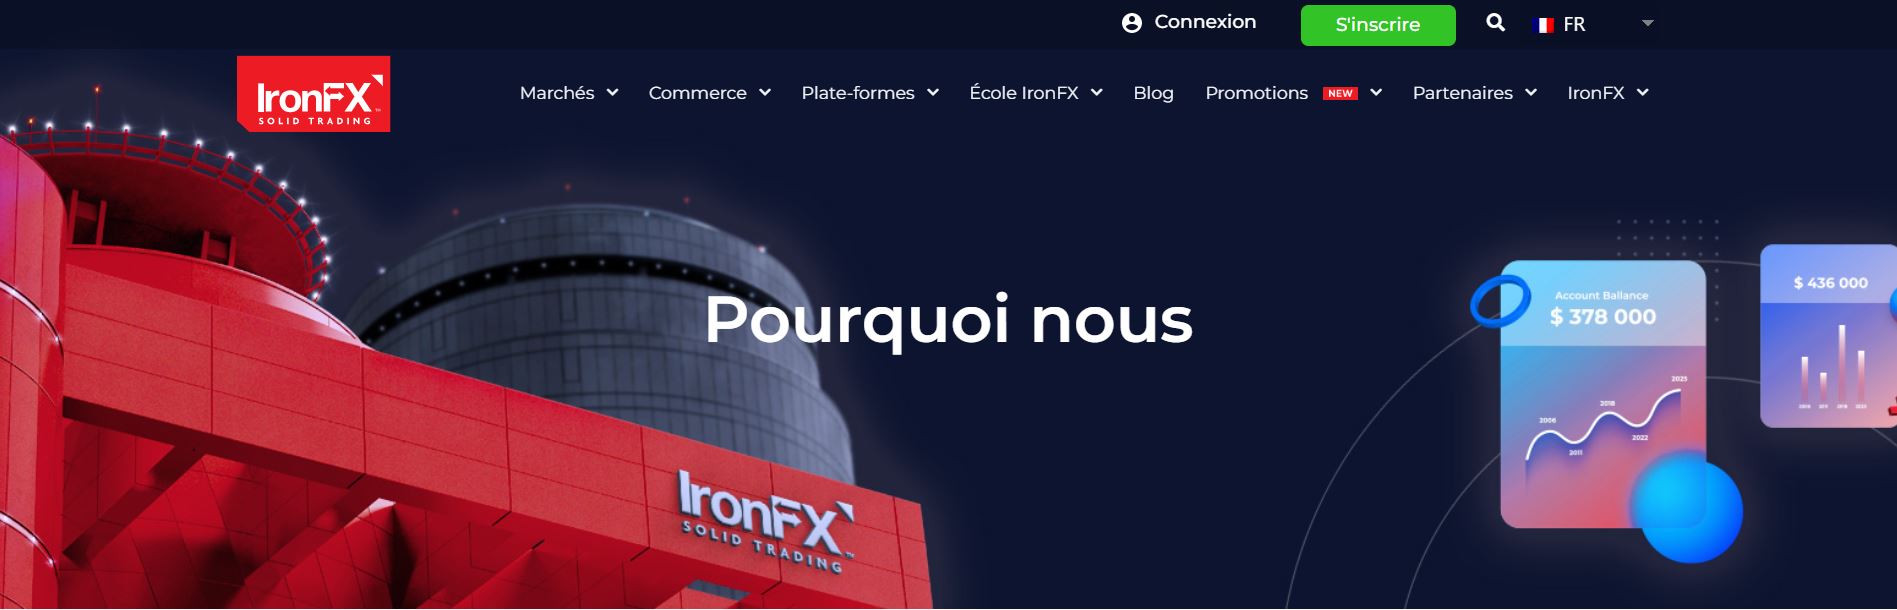 Pourquoi choisir IronFX pour vos trading